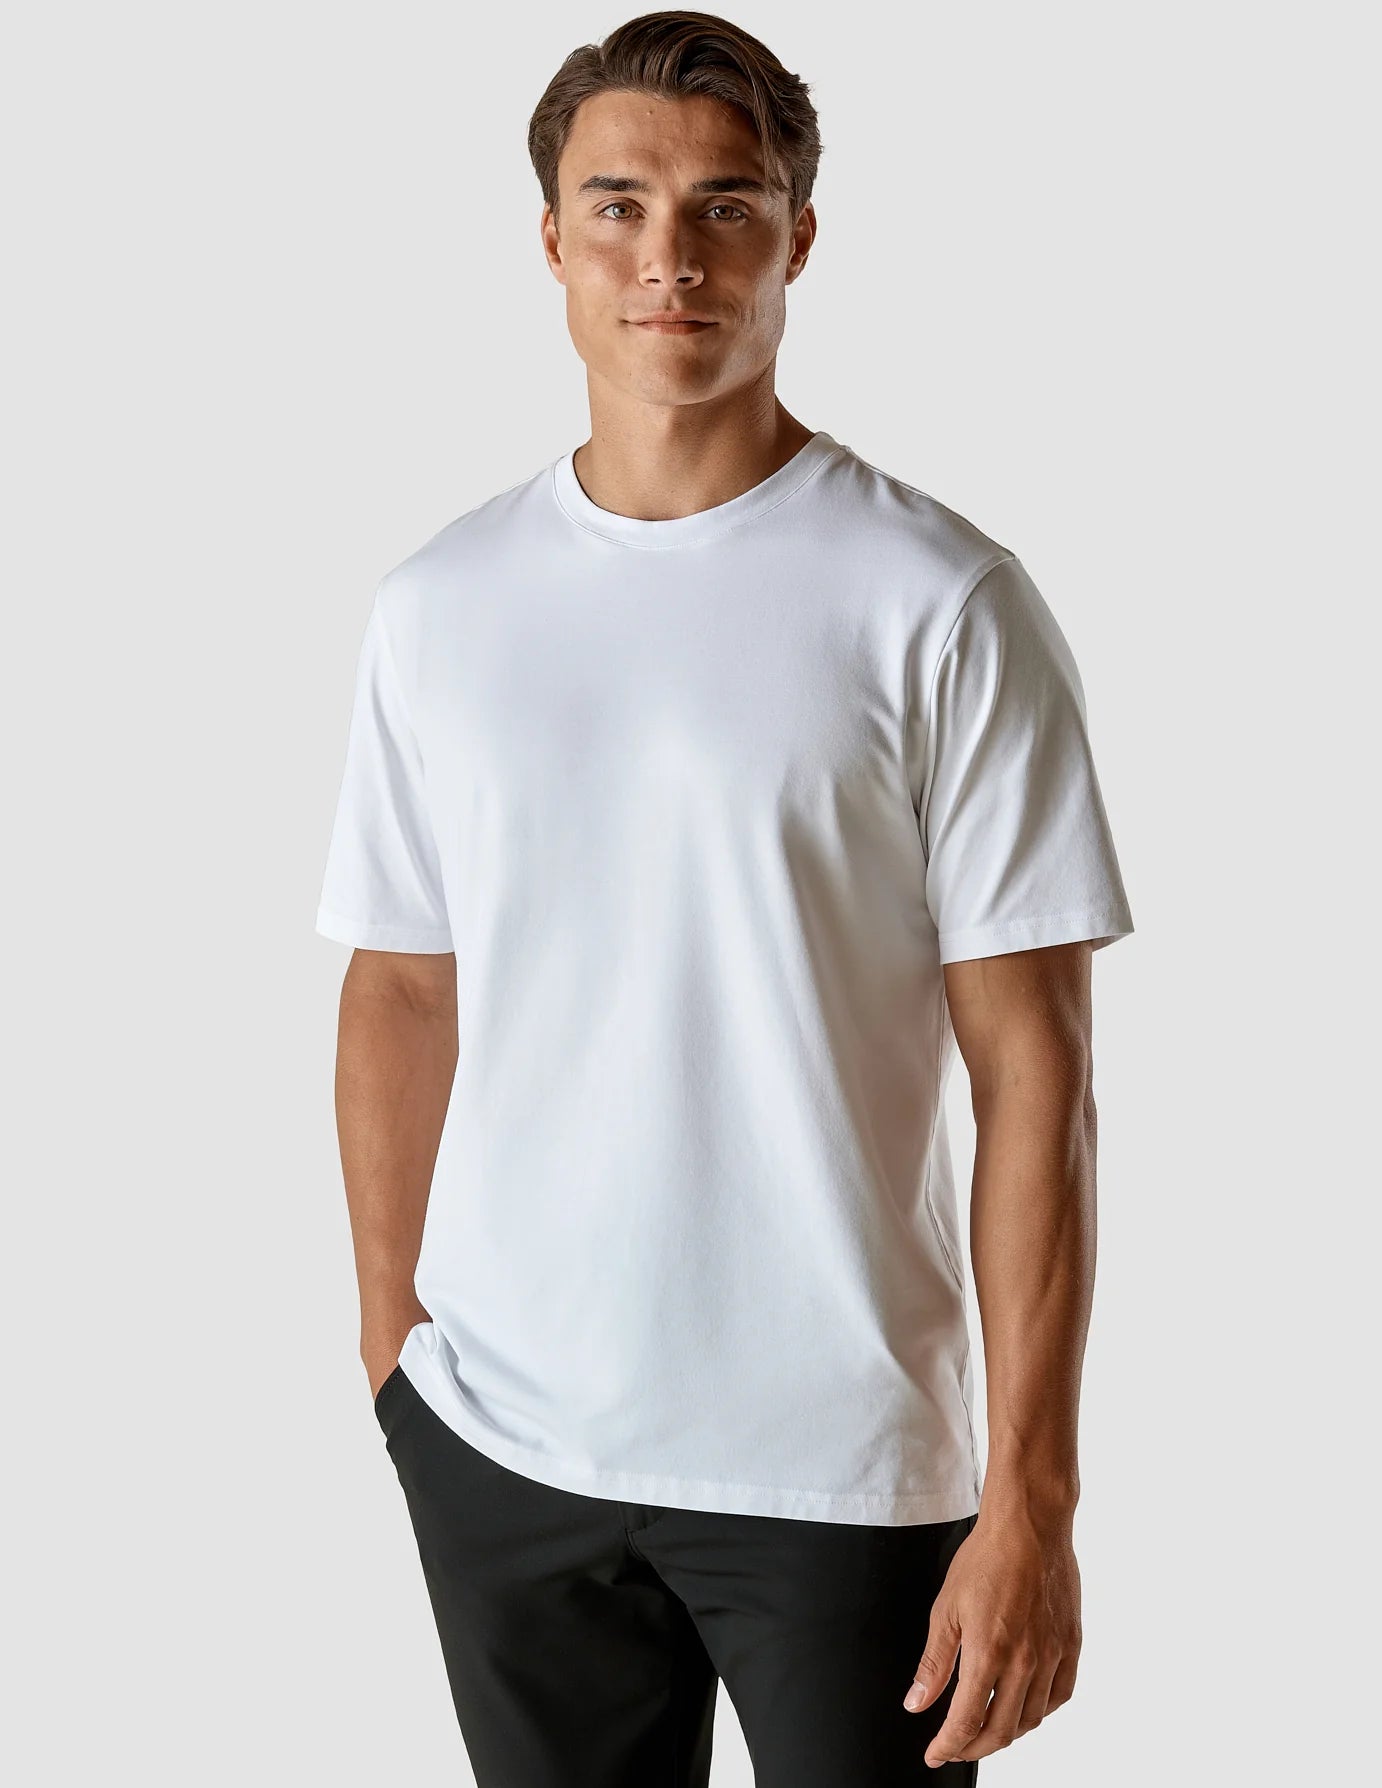 Supima Cotton Crew Neck Half Sleeve T-Shirt - SoilStyle